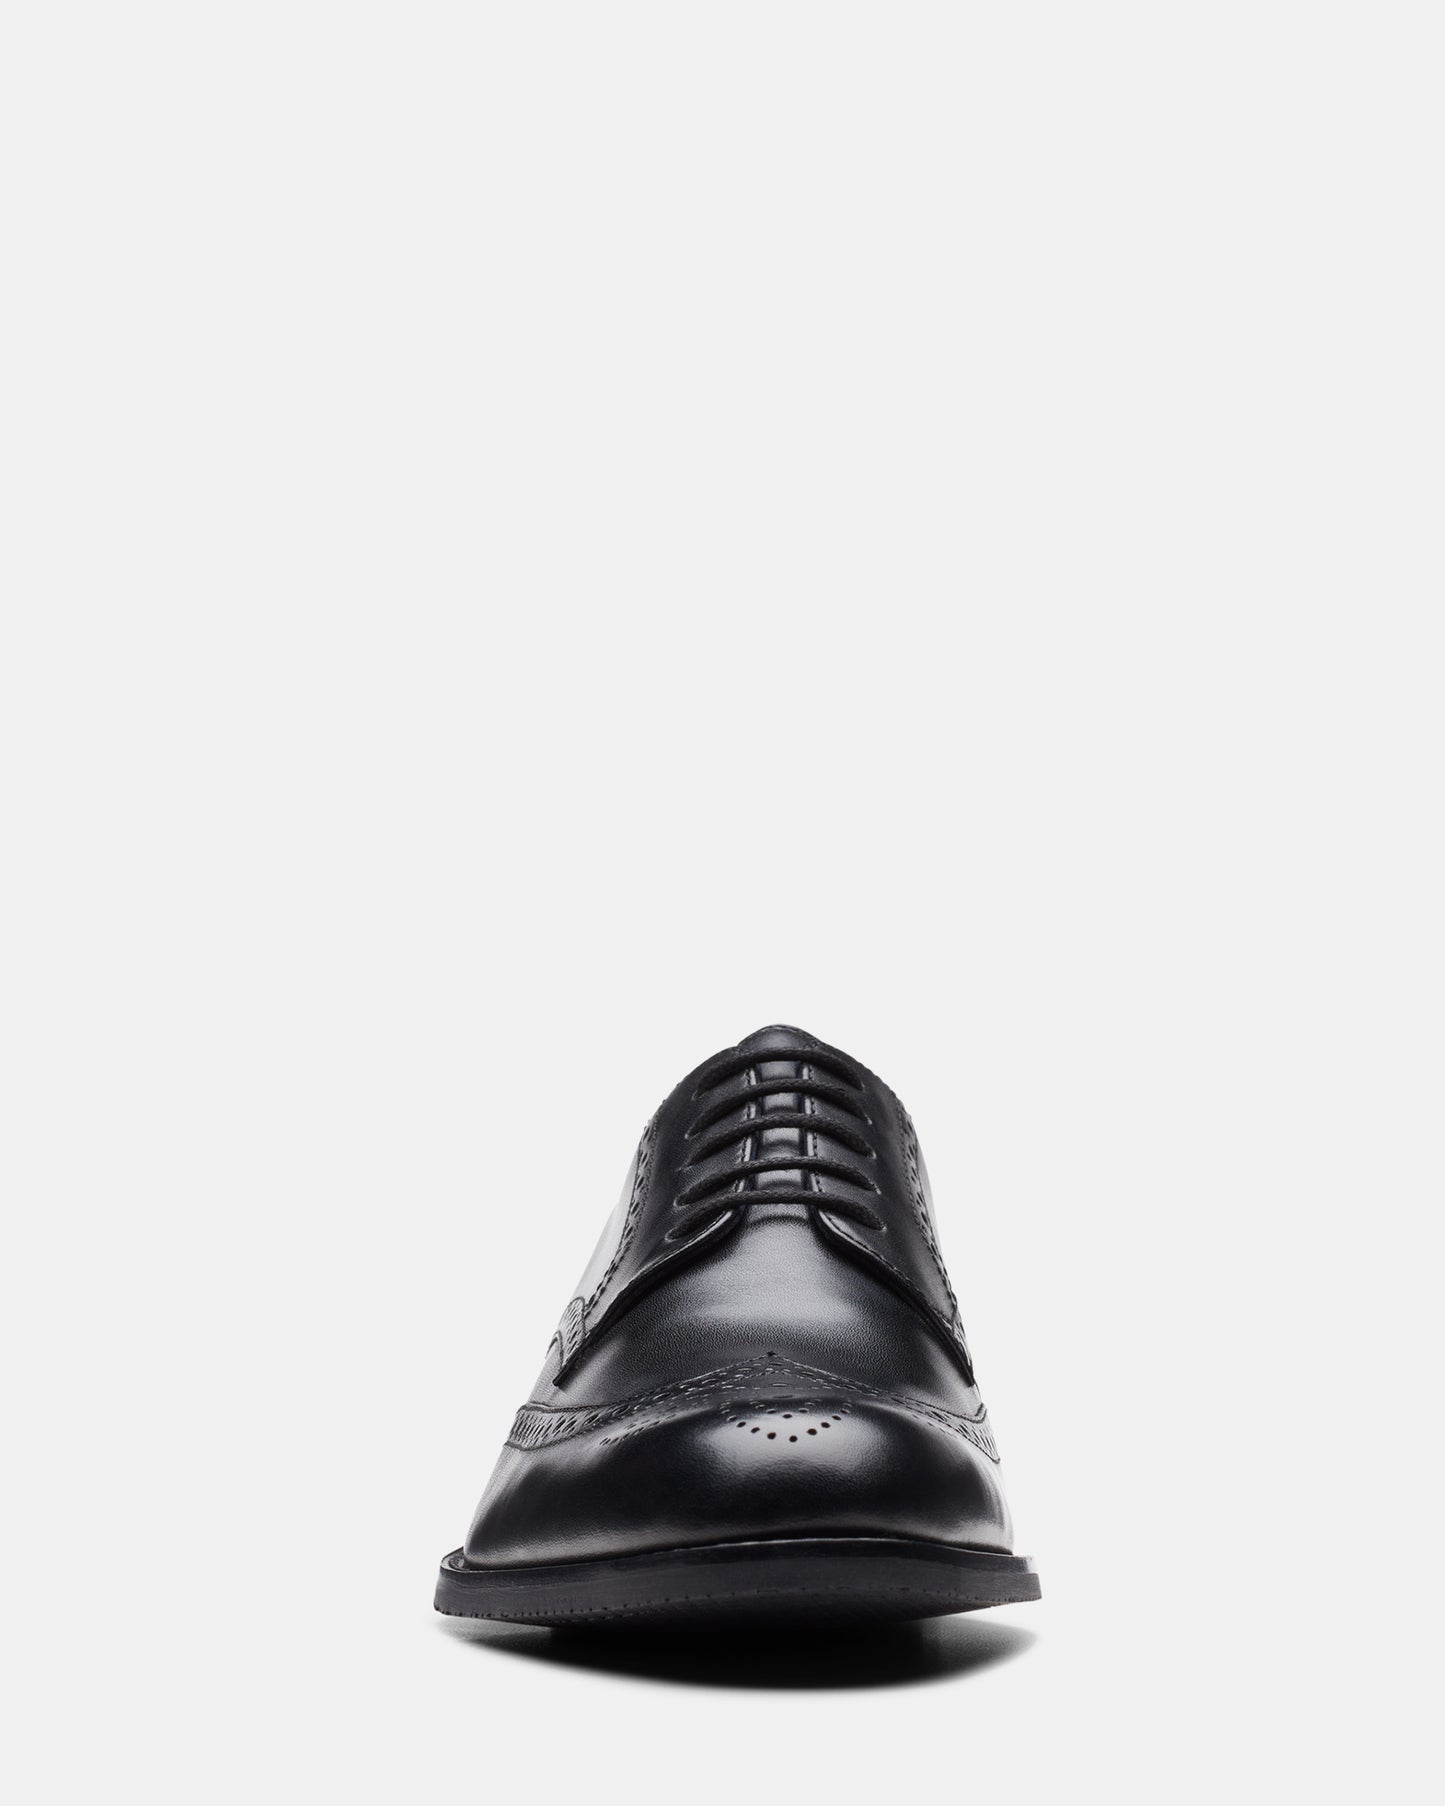 Craftarlo Limit Black Leather